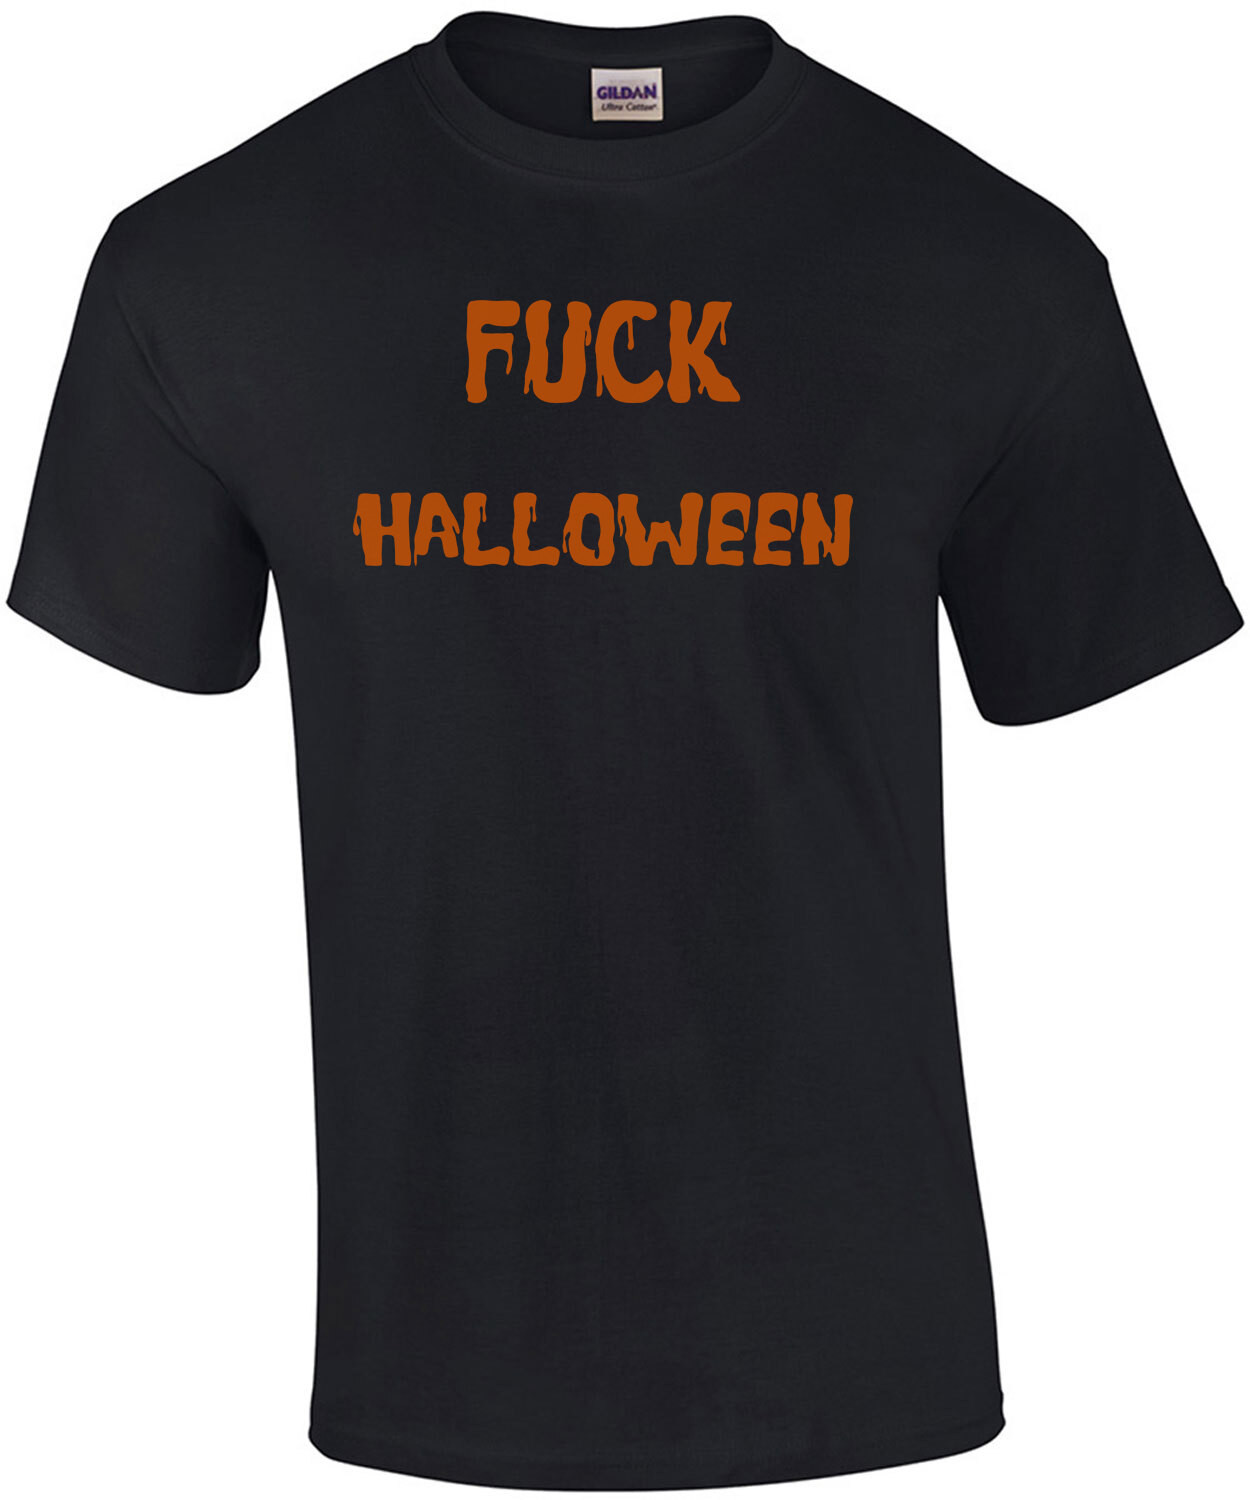 Fuck Halloween - Halloween Shirt